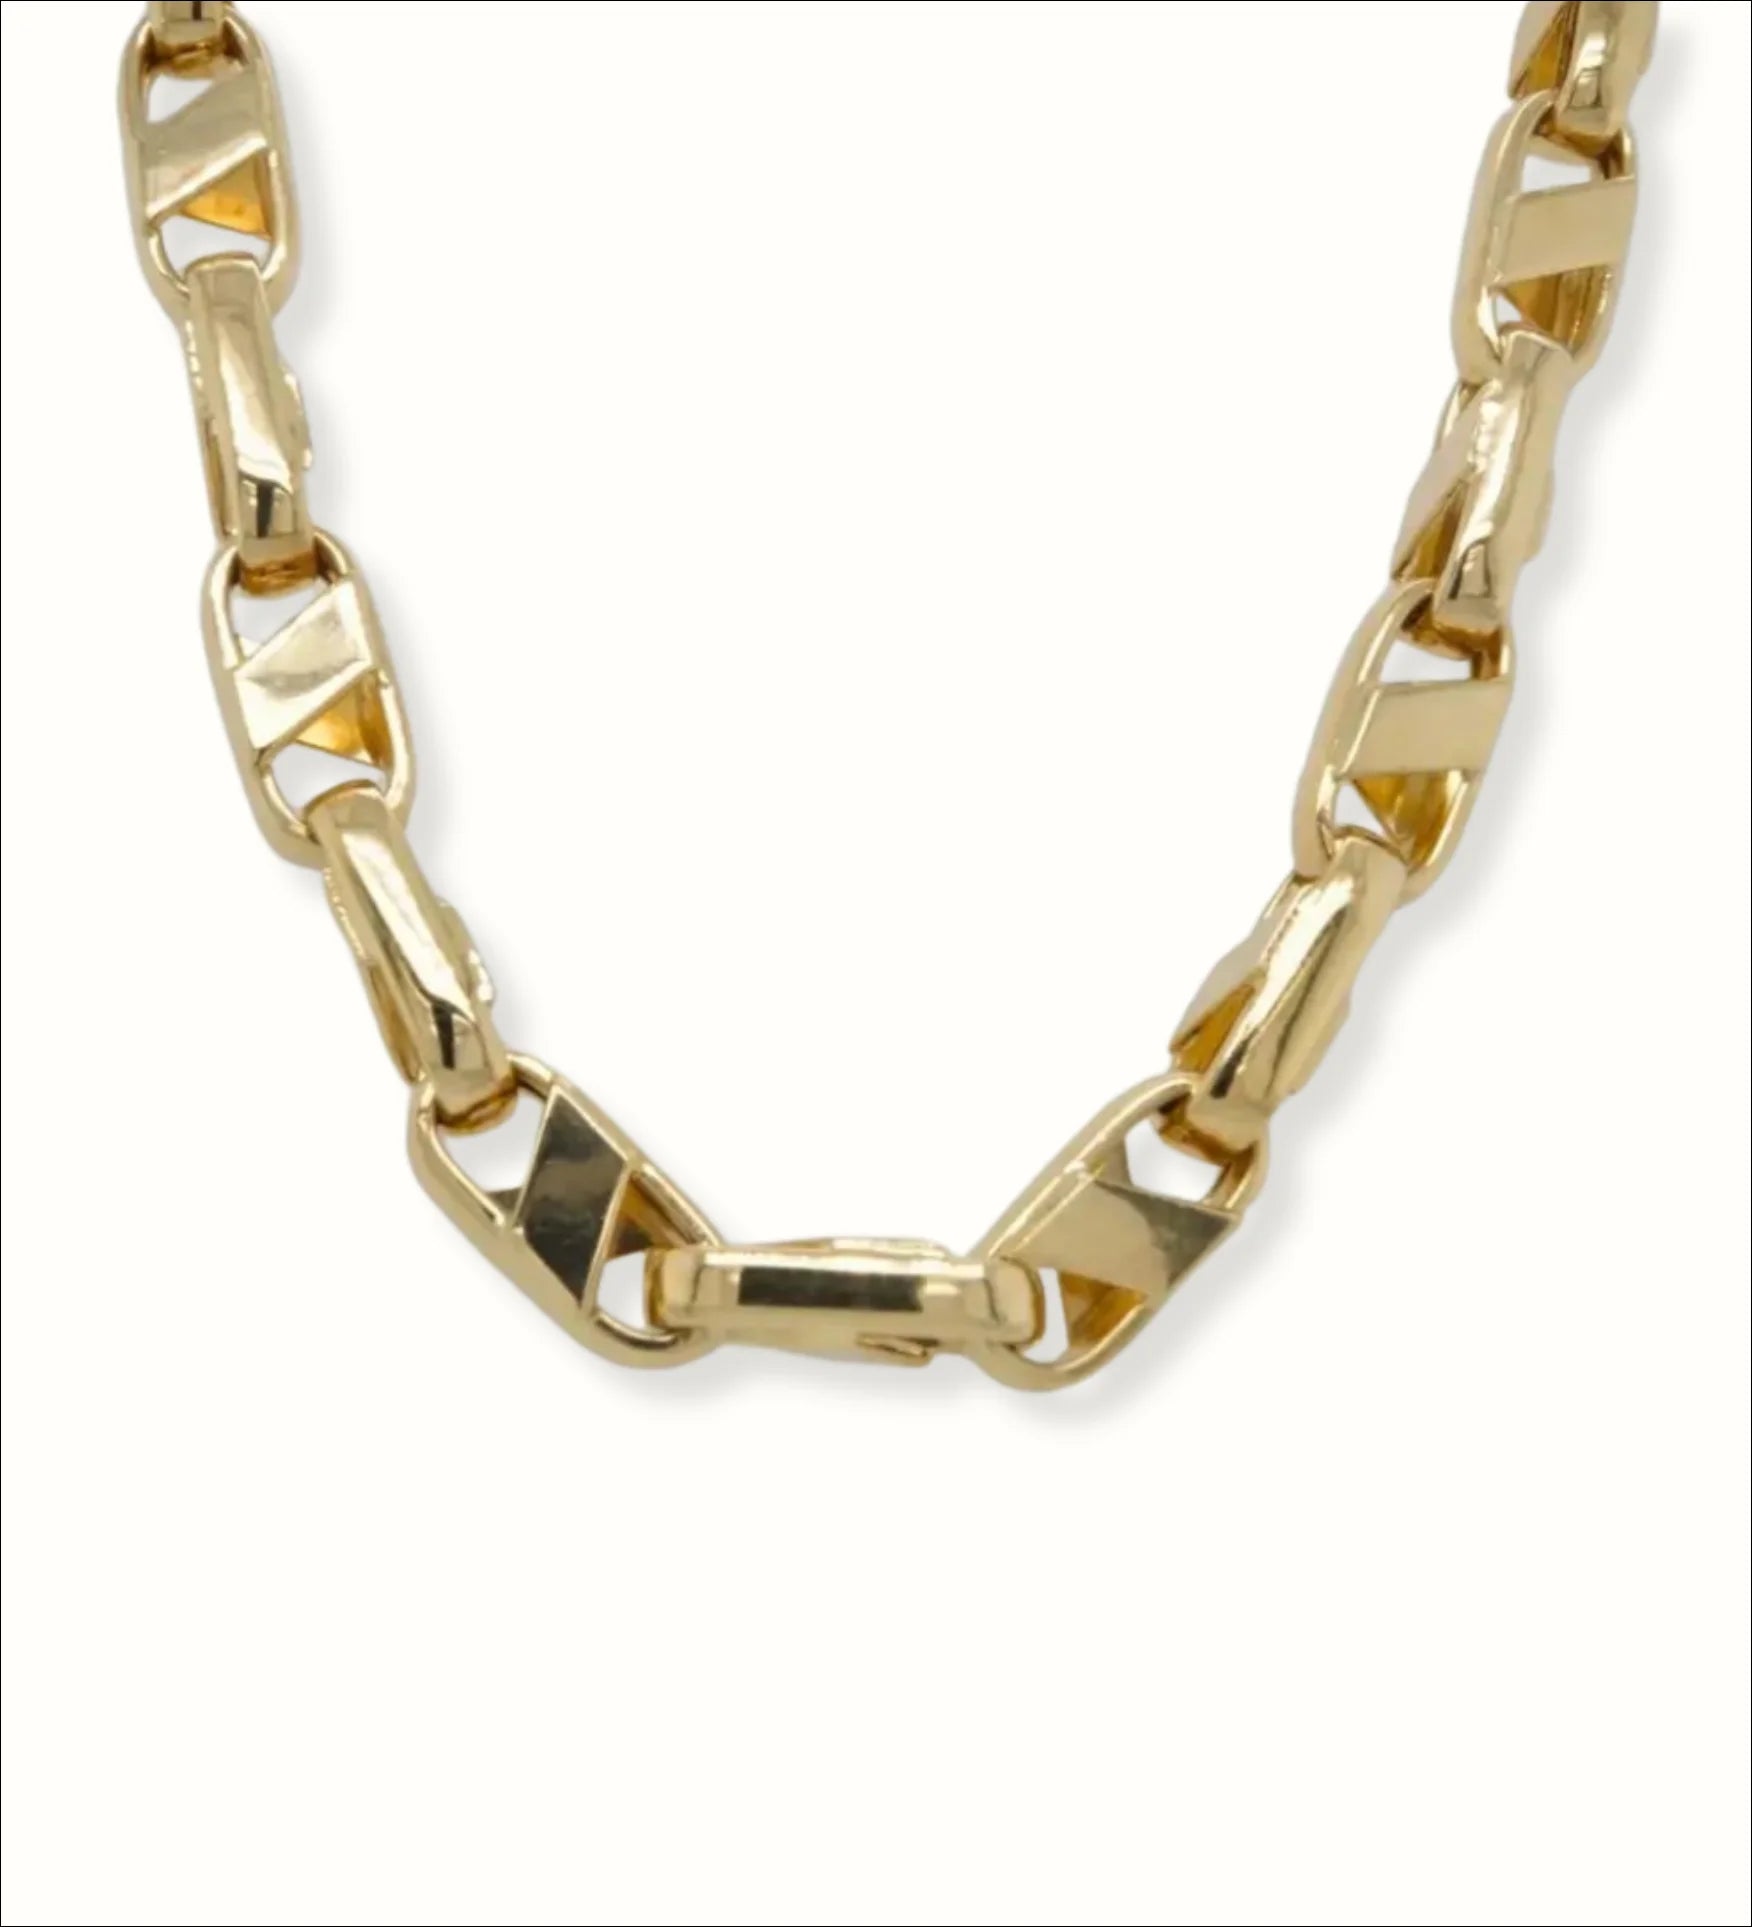 Luxury 18k Gold Chain - Boston Exclusivity | Above $1000